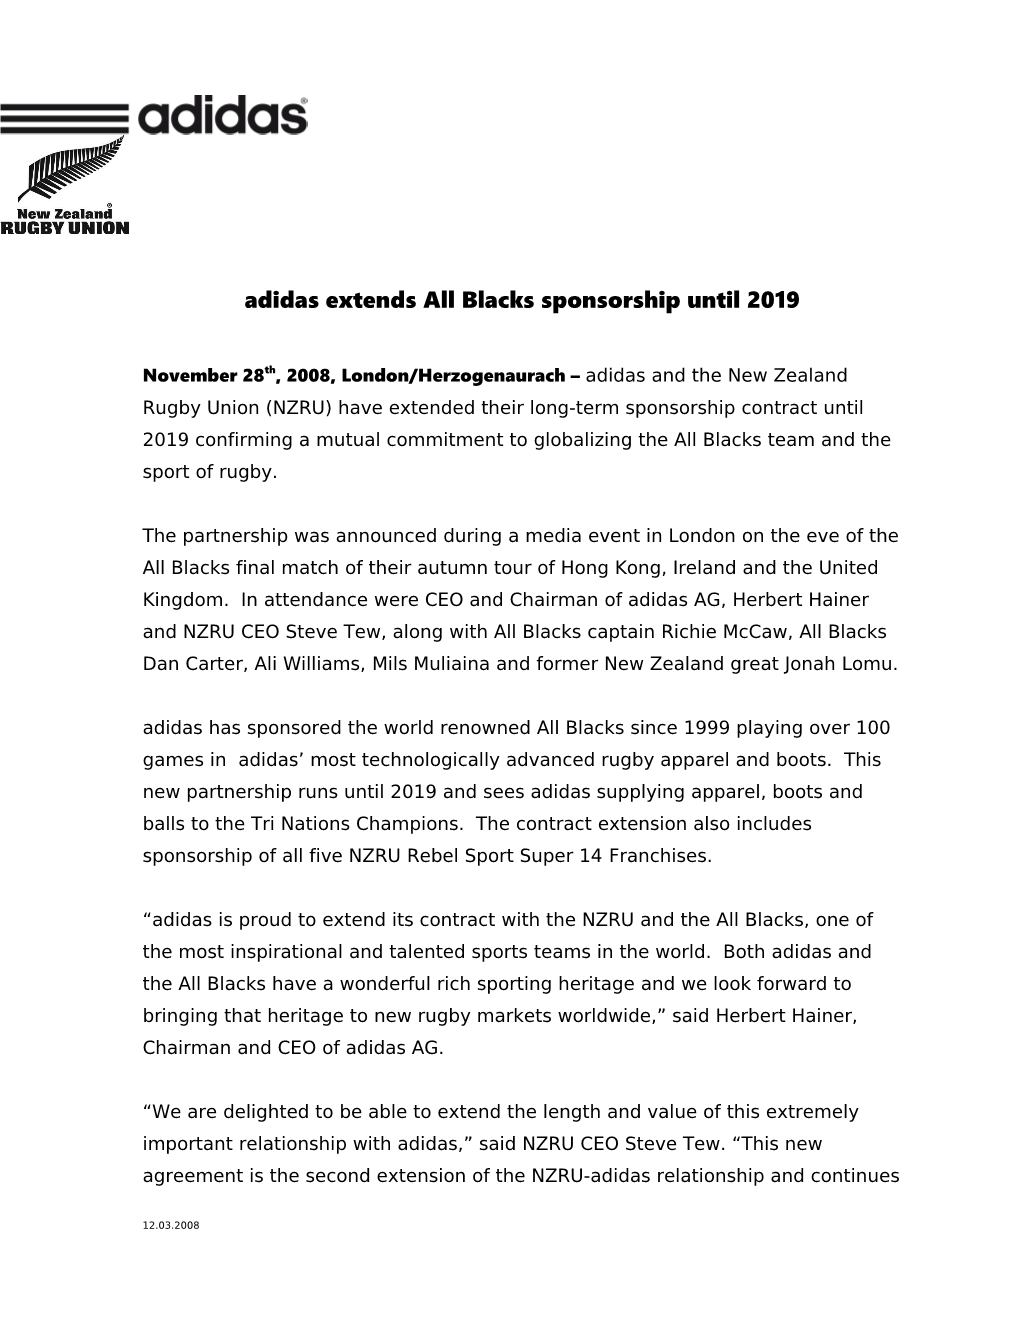 Adidas Extends All Blacks Sponsorship Until 2019